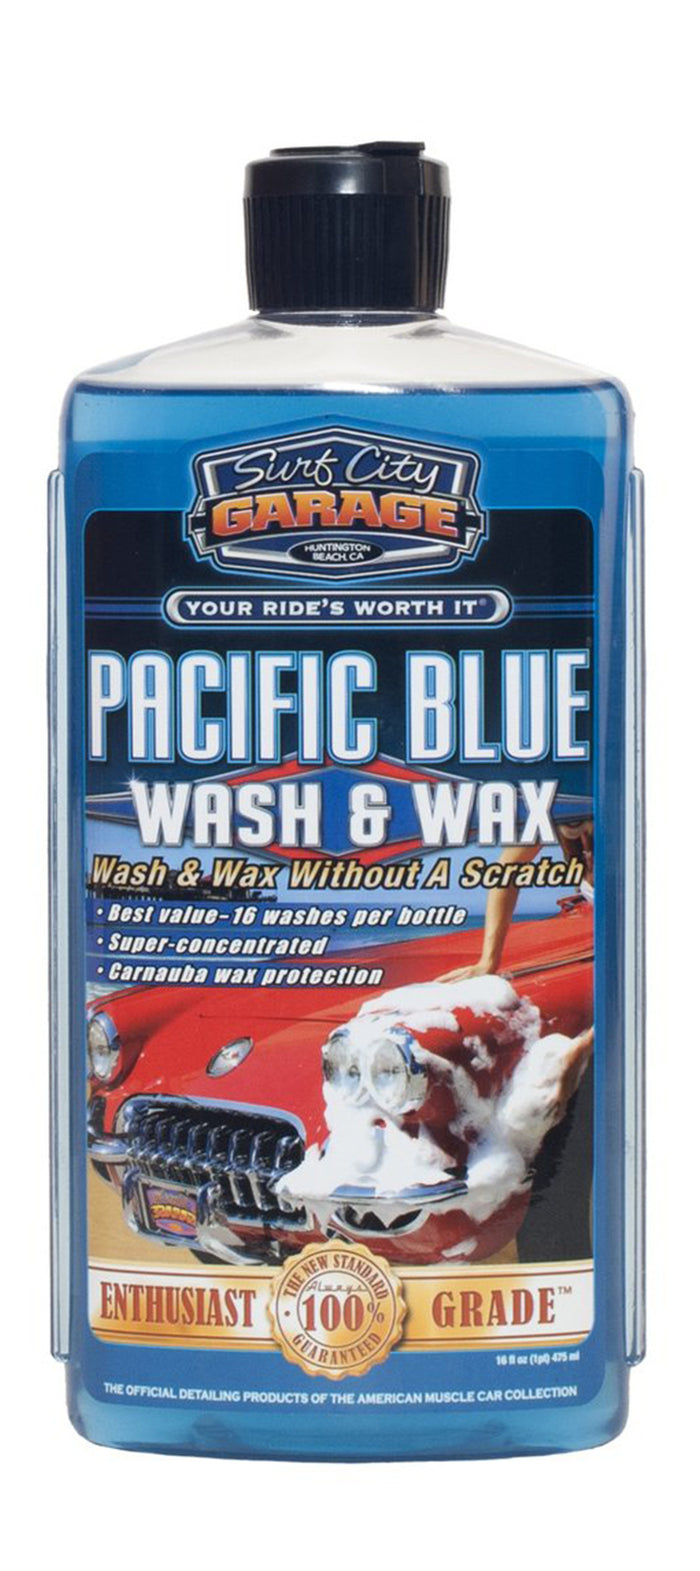 Pacific Blue® Wash & Wax